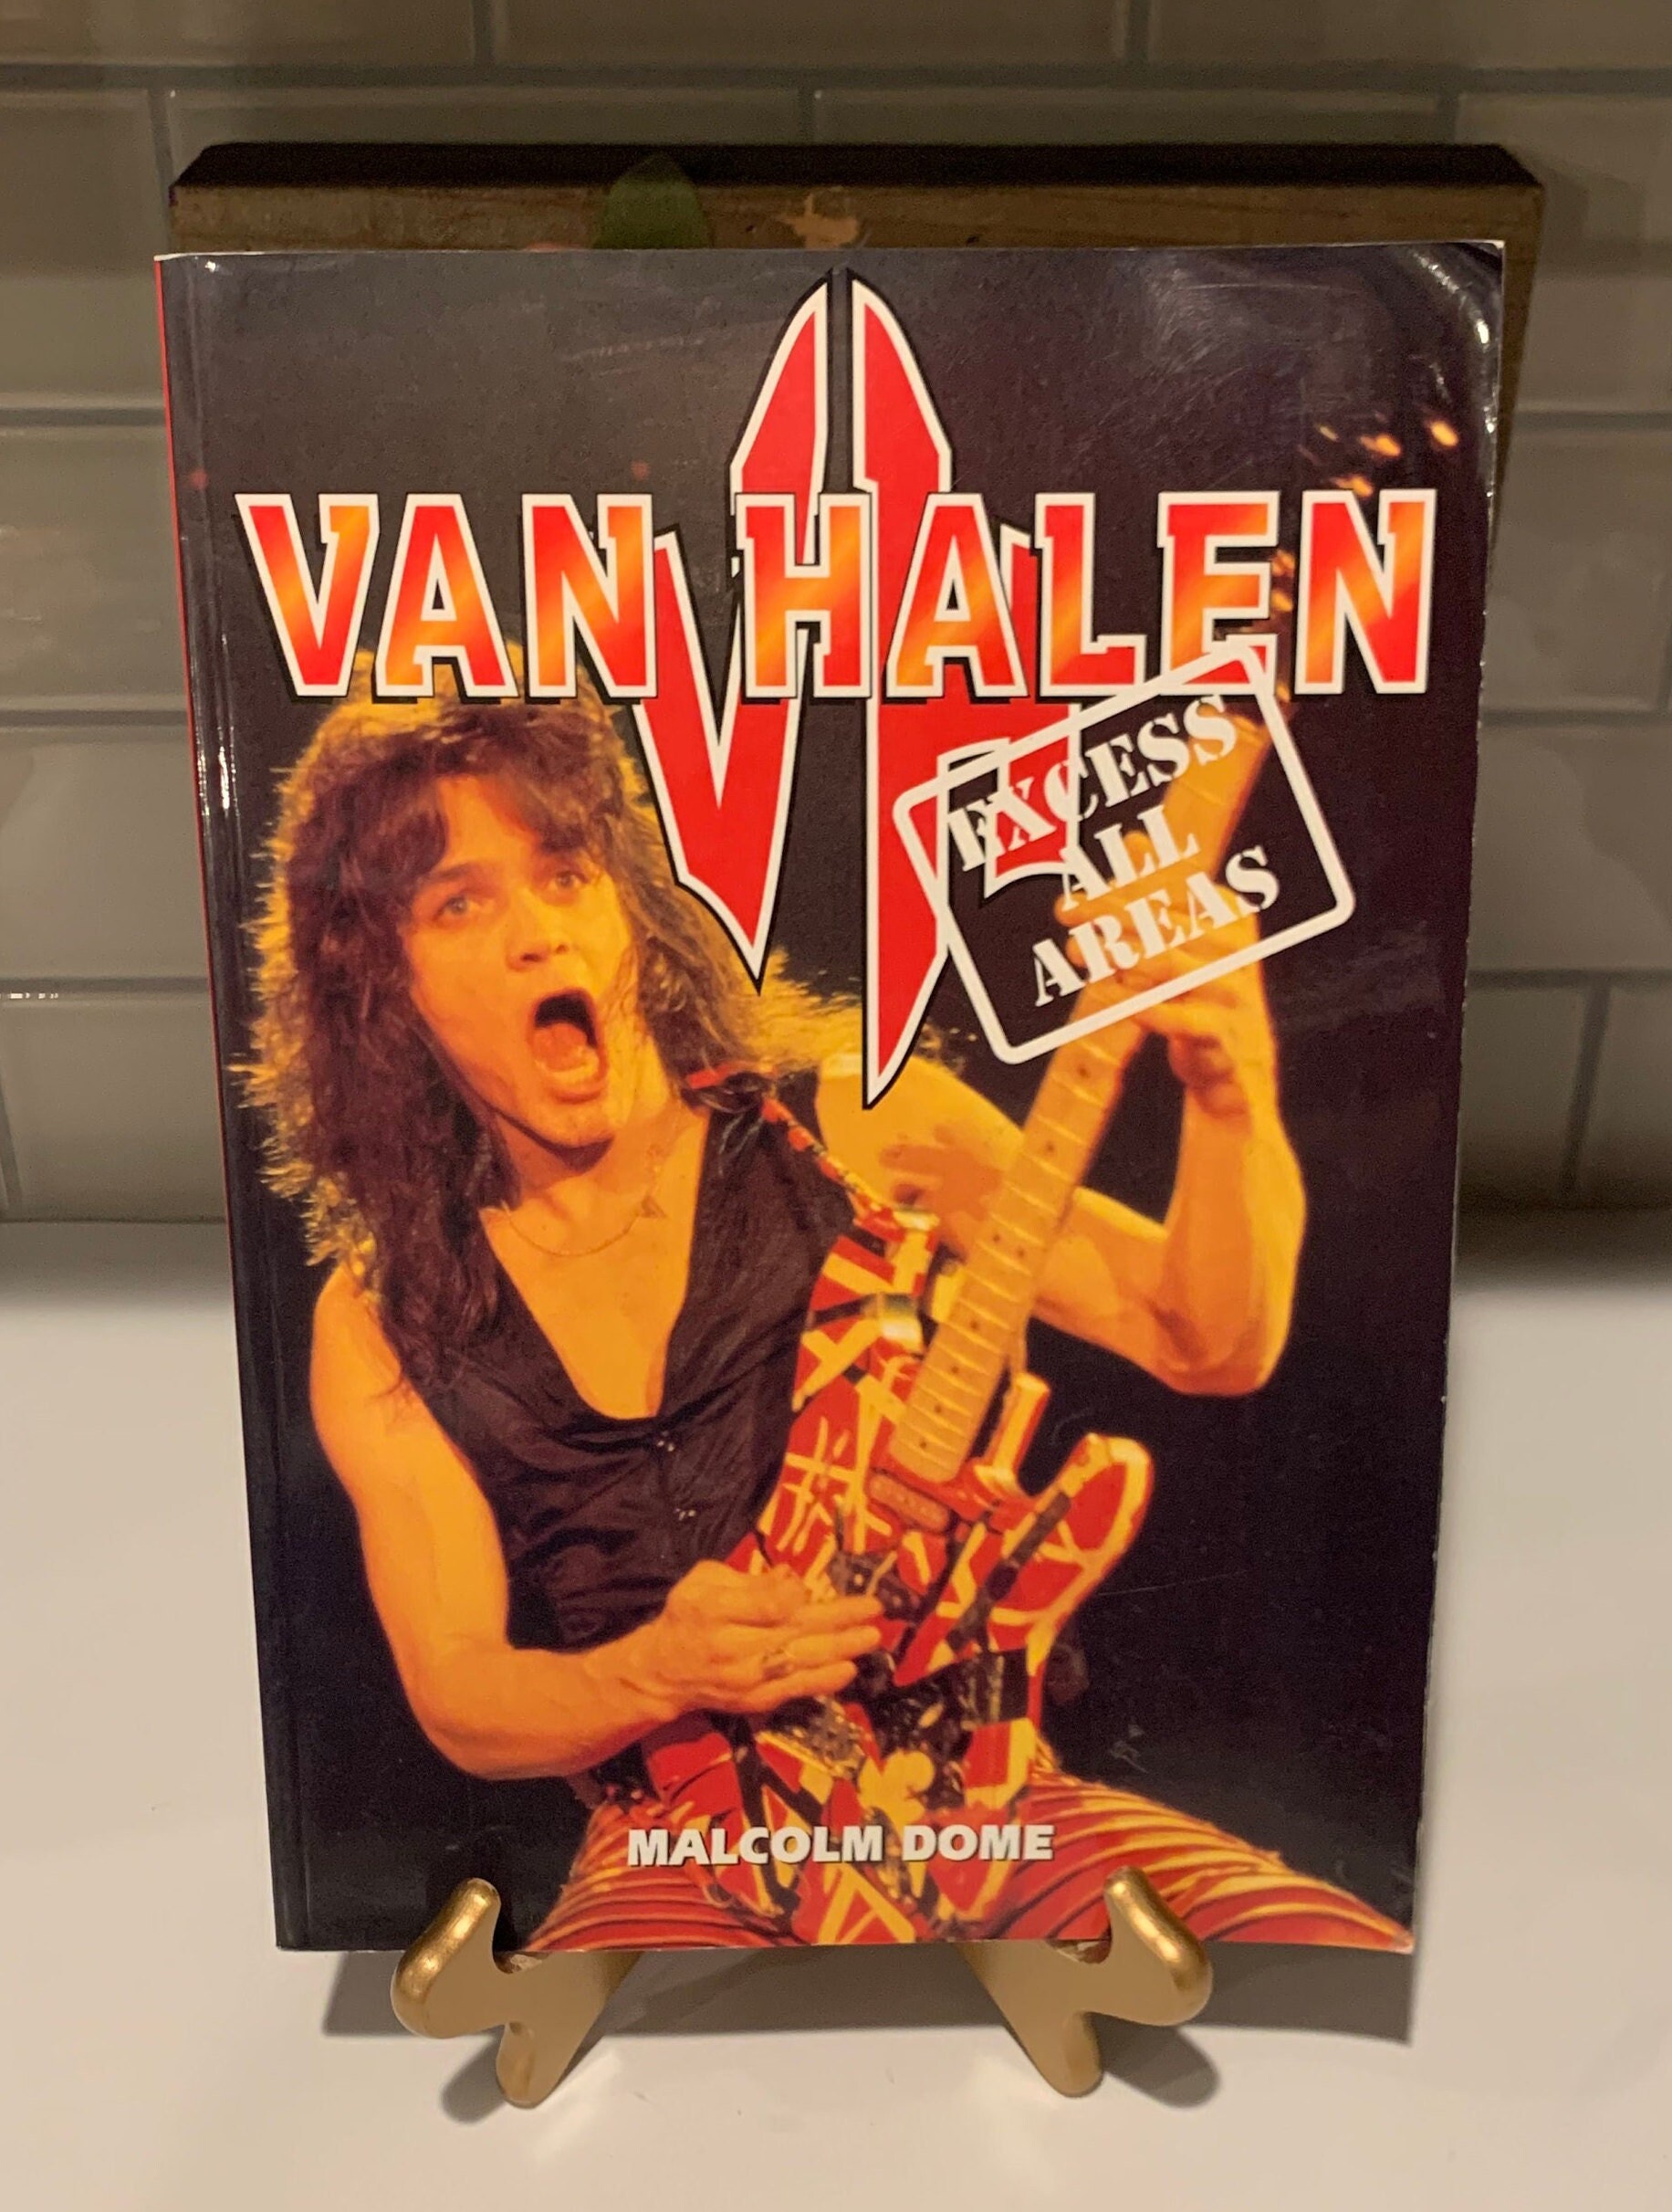 Van Halen Excess All Areas by Malcolm Dome | Van Halen Biography 1994